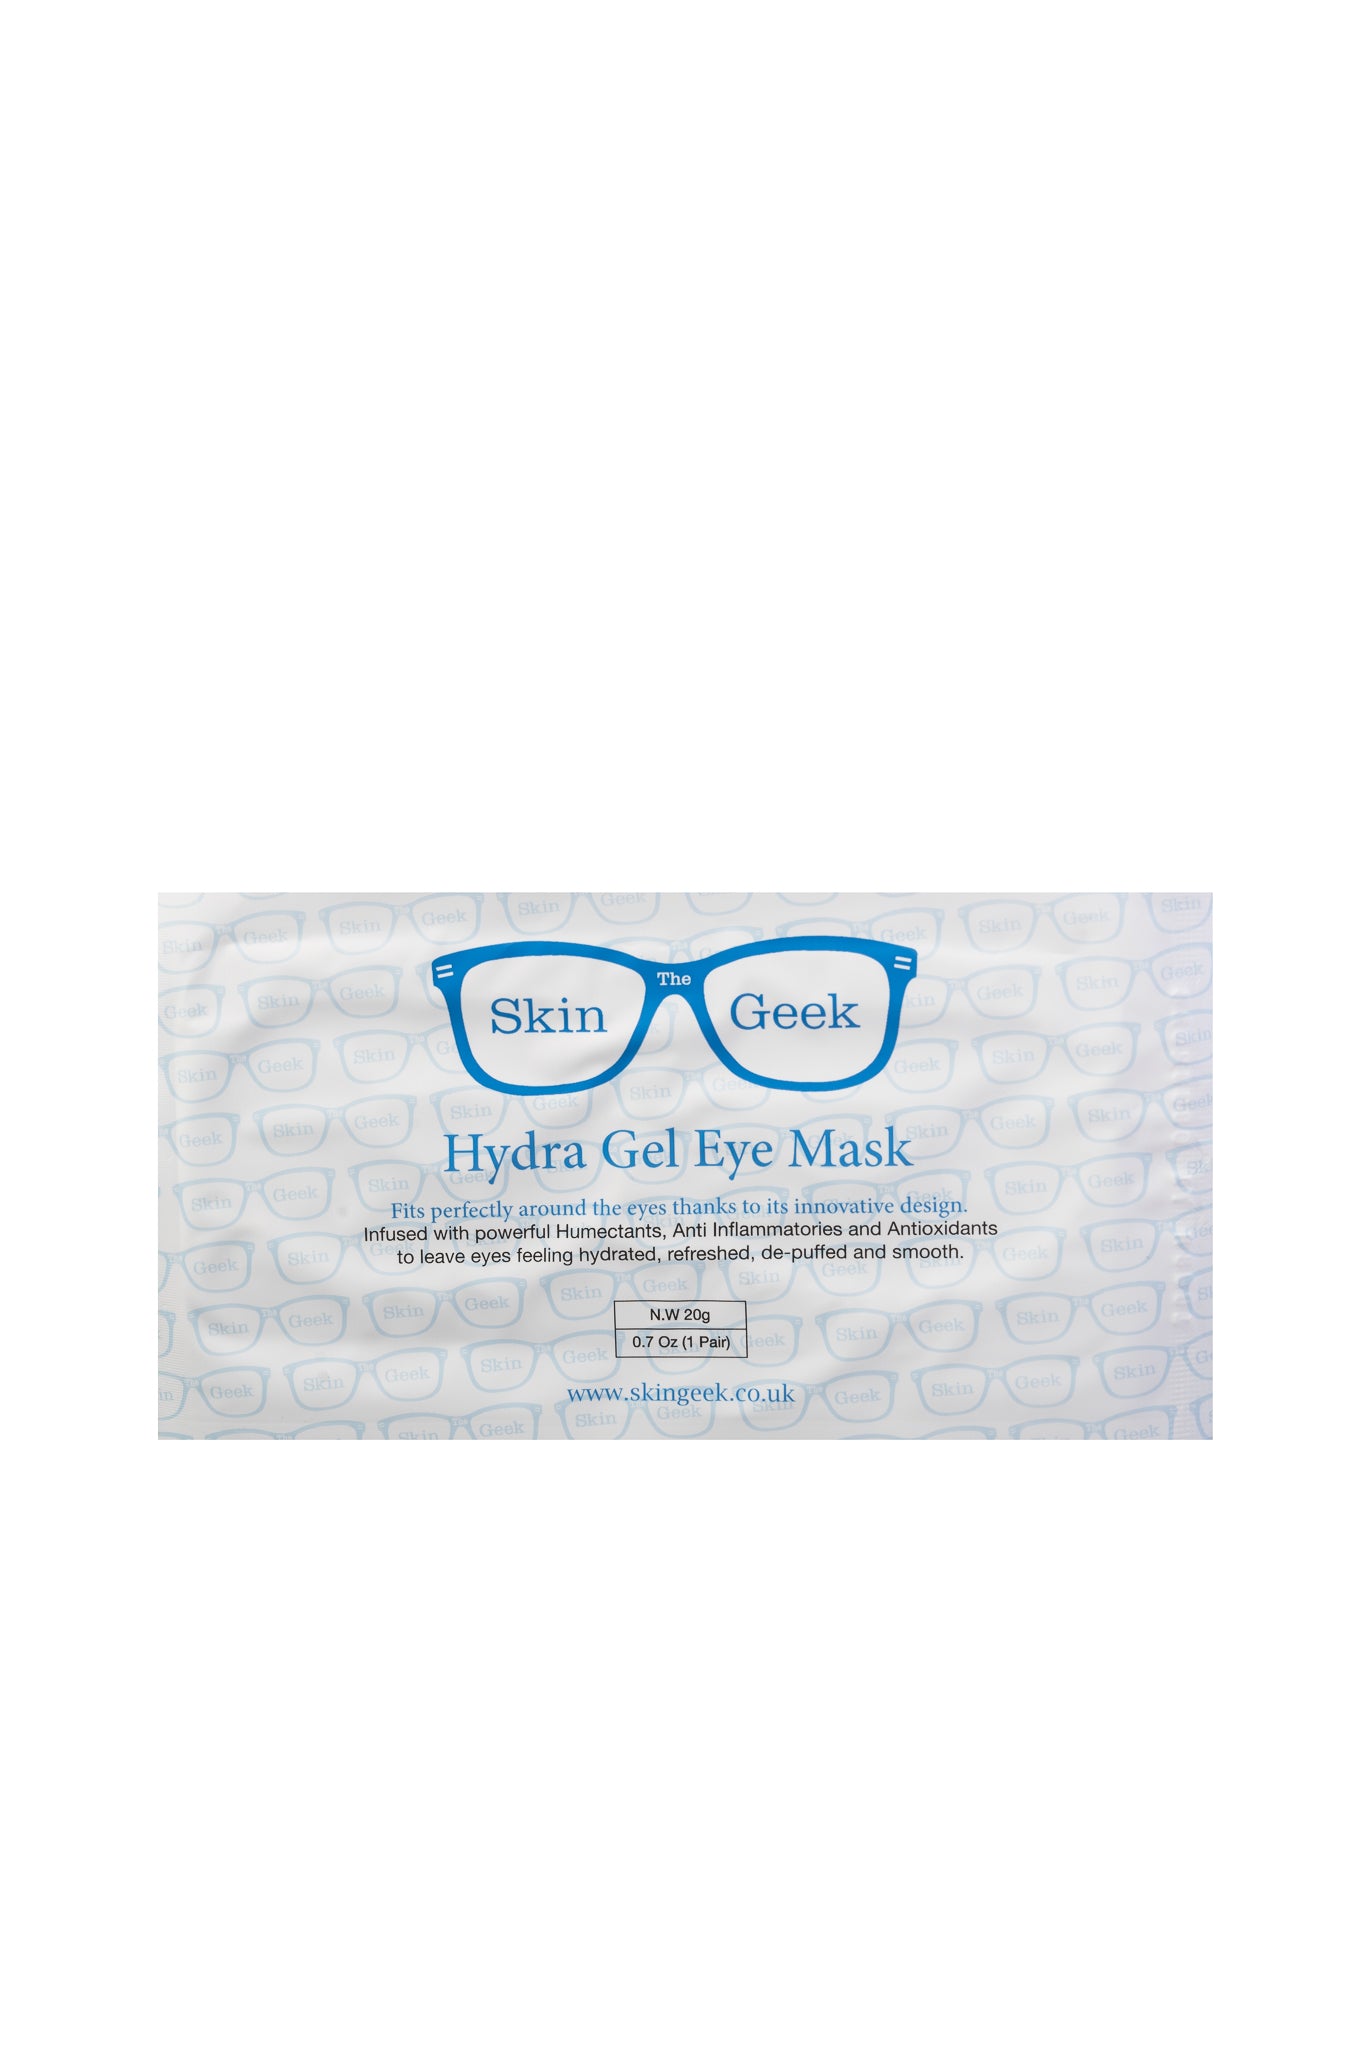 The Skin Geek™ Hydra Gel Eye Mask